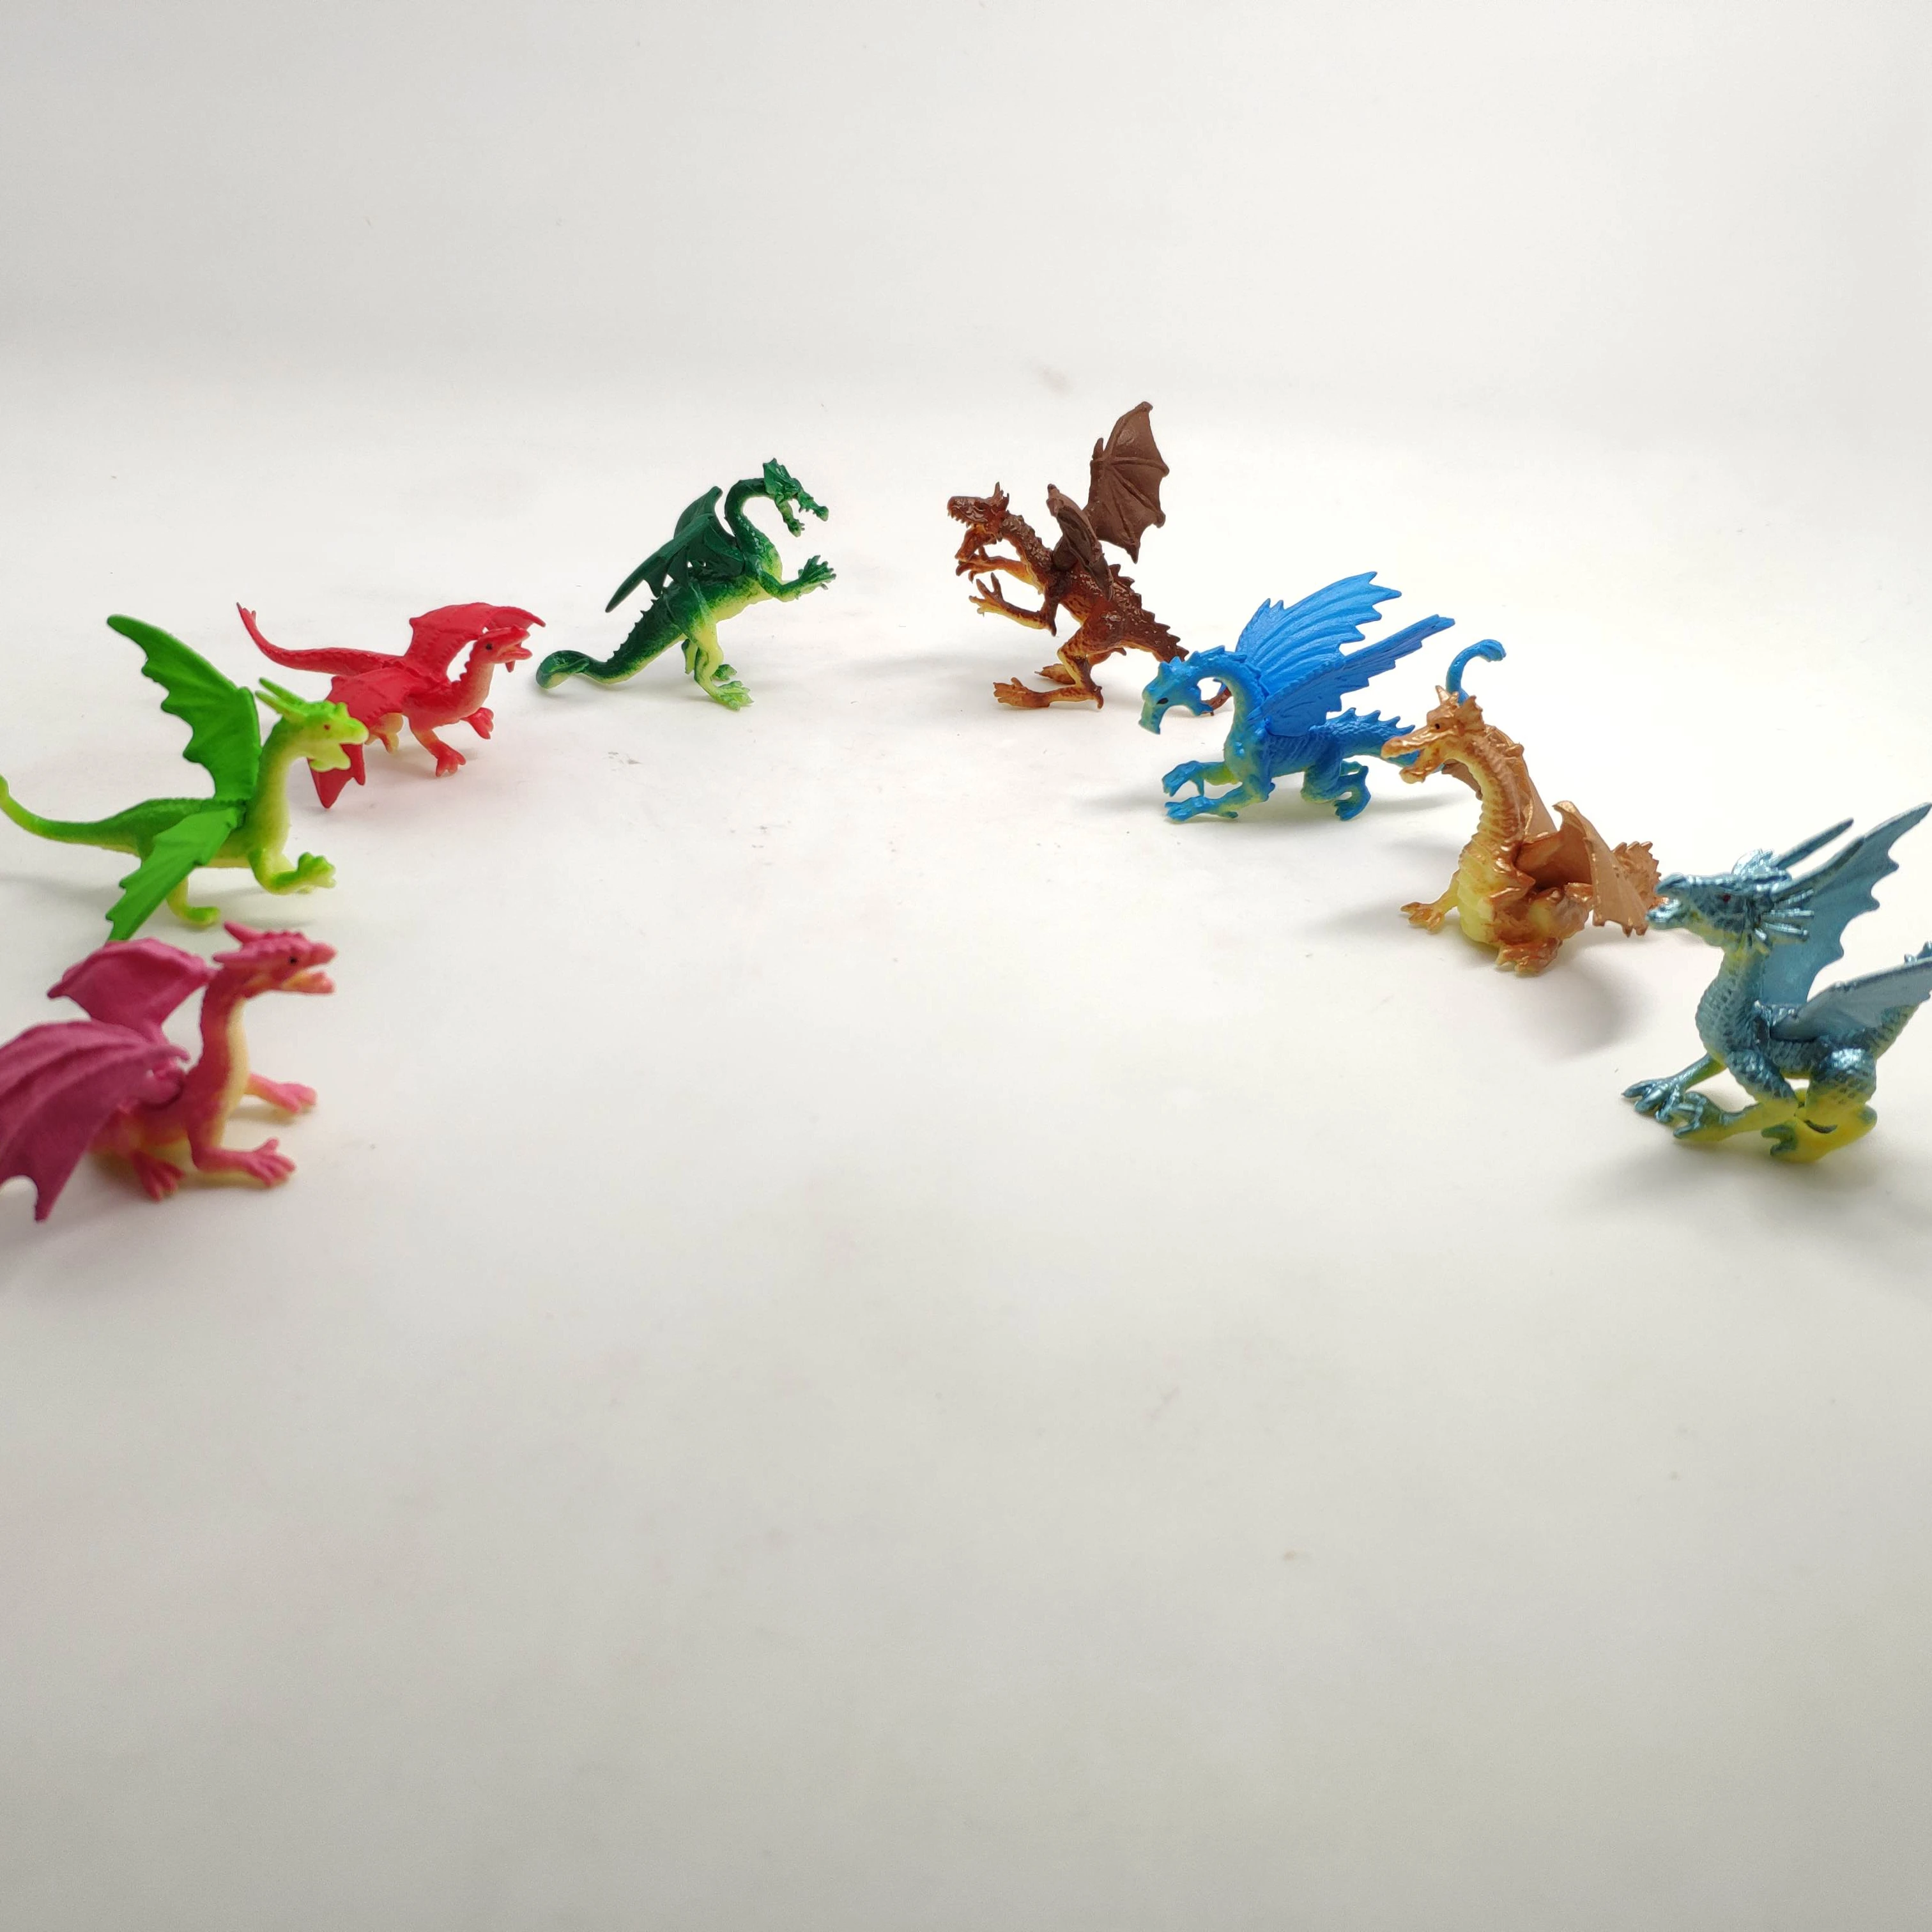 мини игрушки драконы фото 11